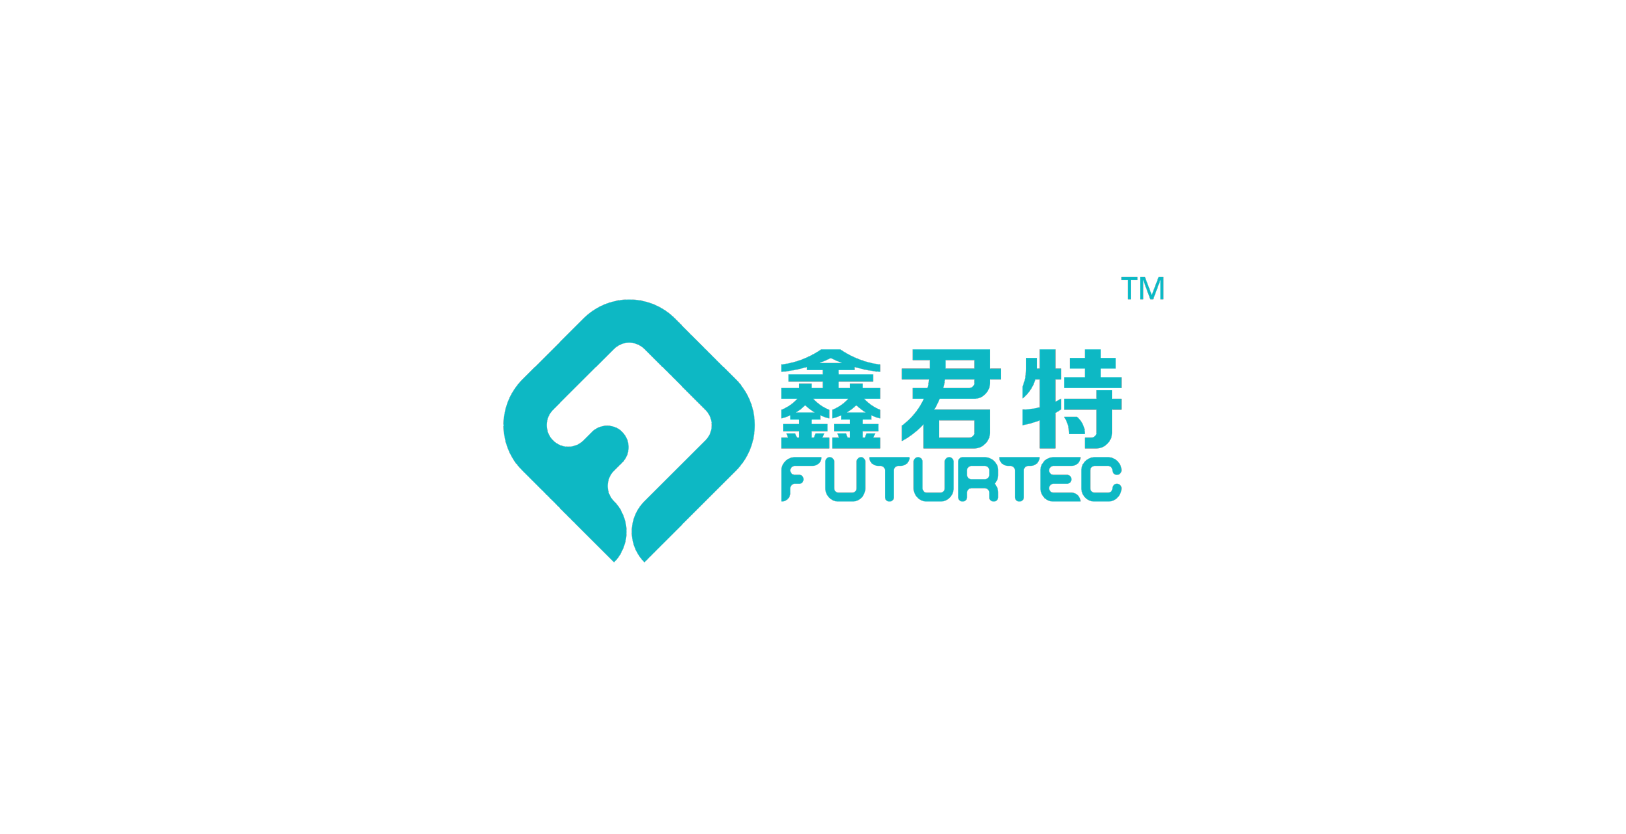 VisionFund Portfolio Company Futurtec's Logo